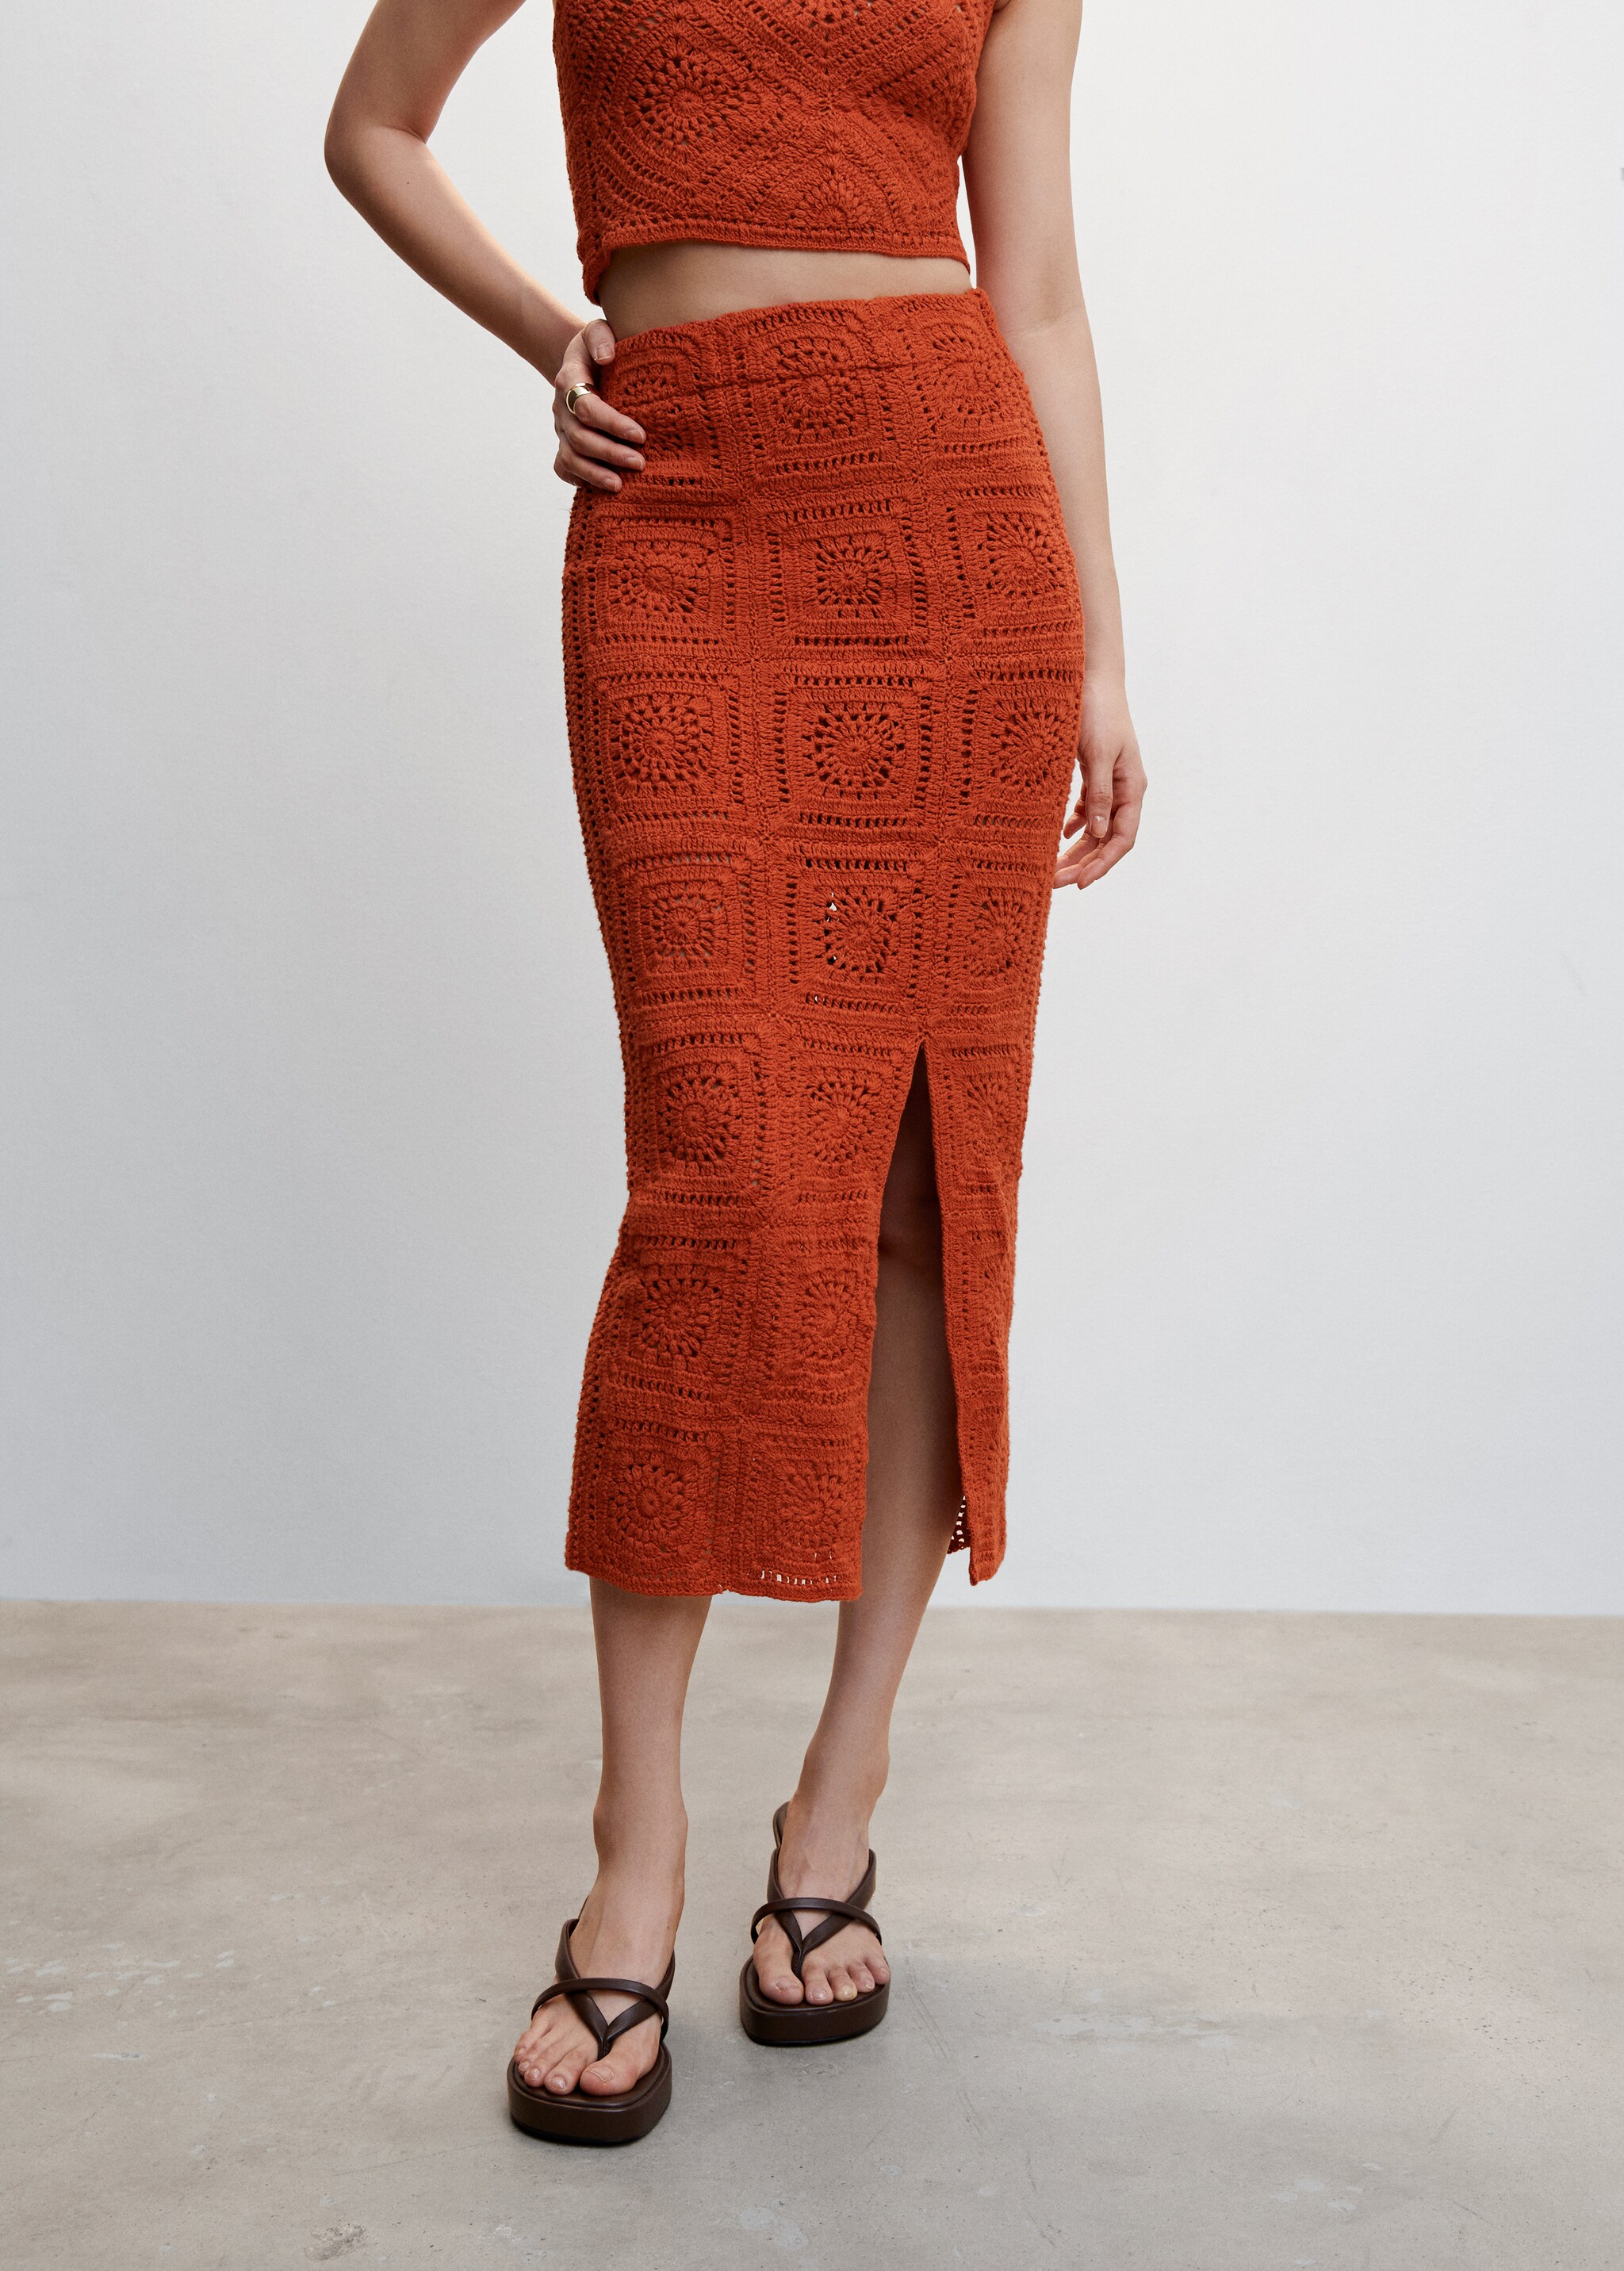 Crochet skirt with opening - Medium plane